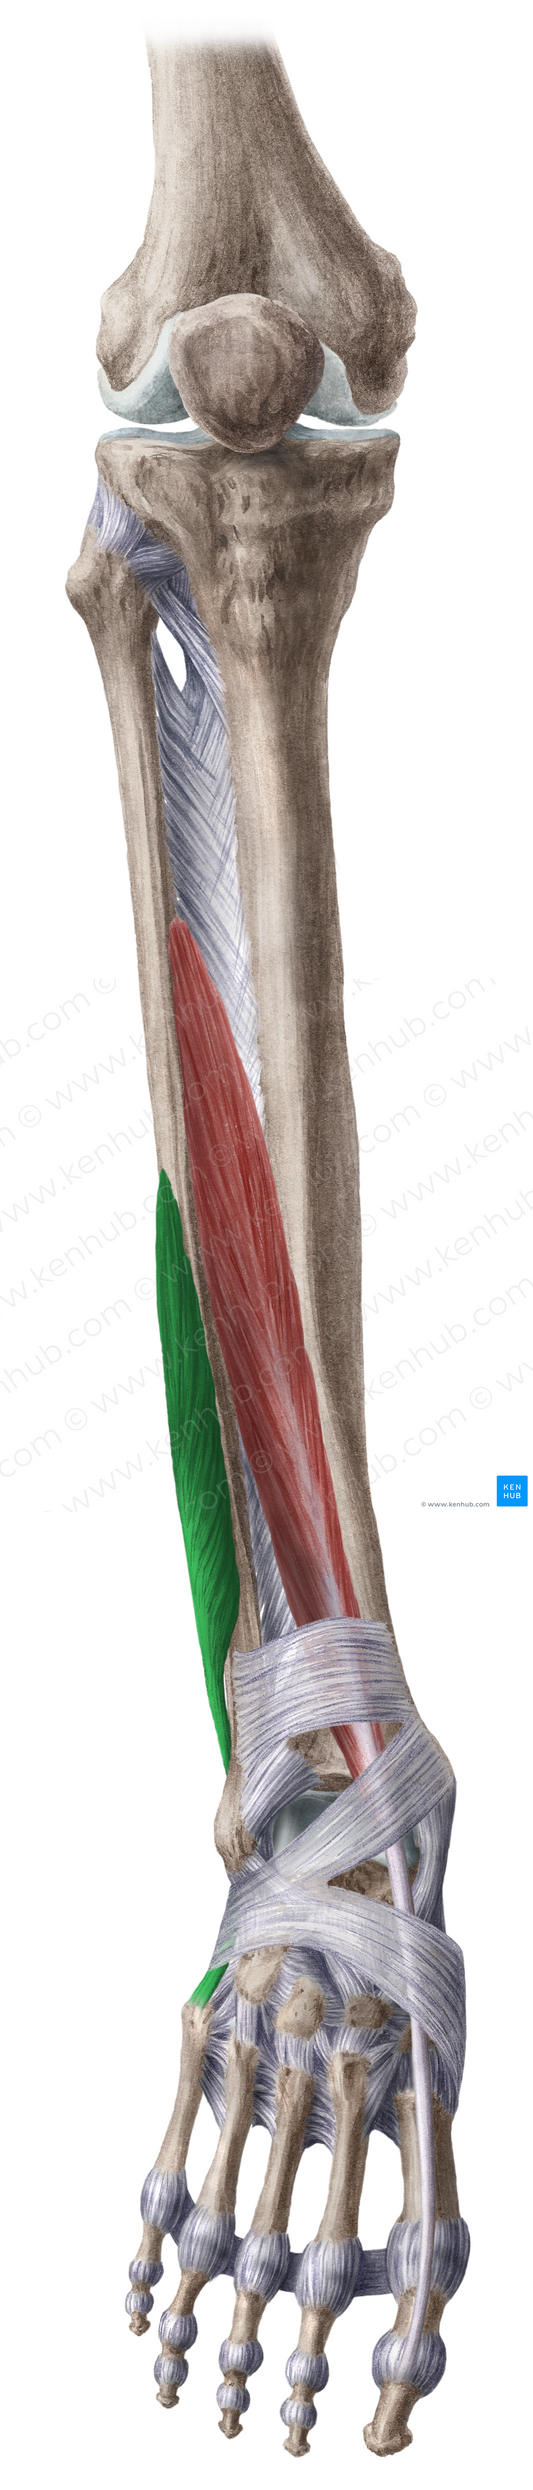 Fibularis brevis muscle (#5753)